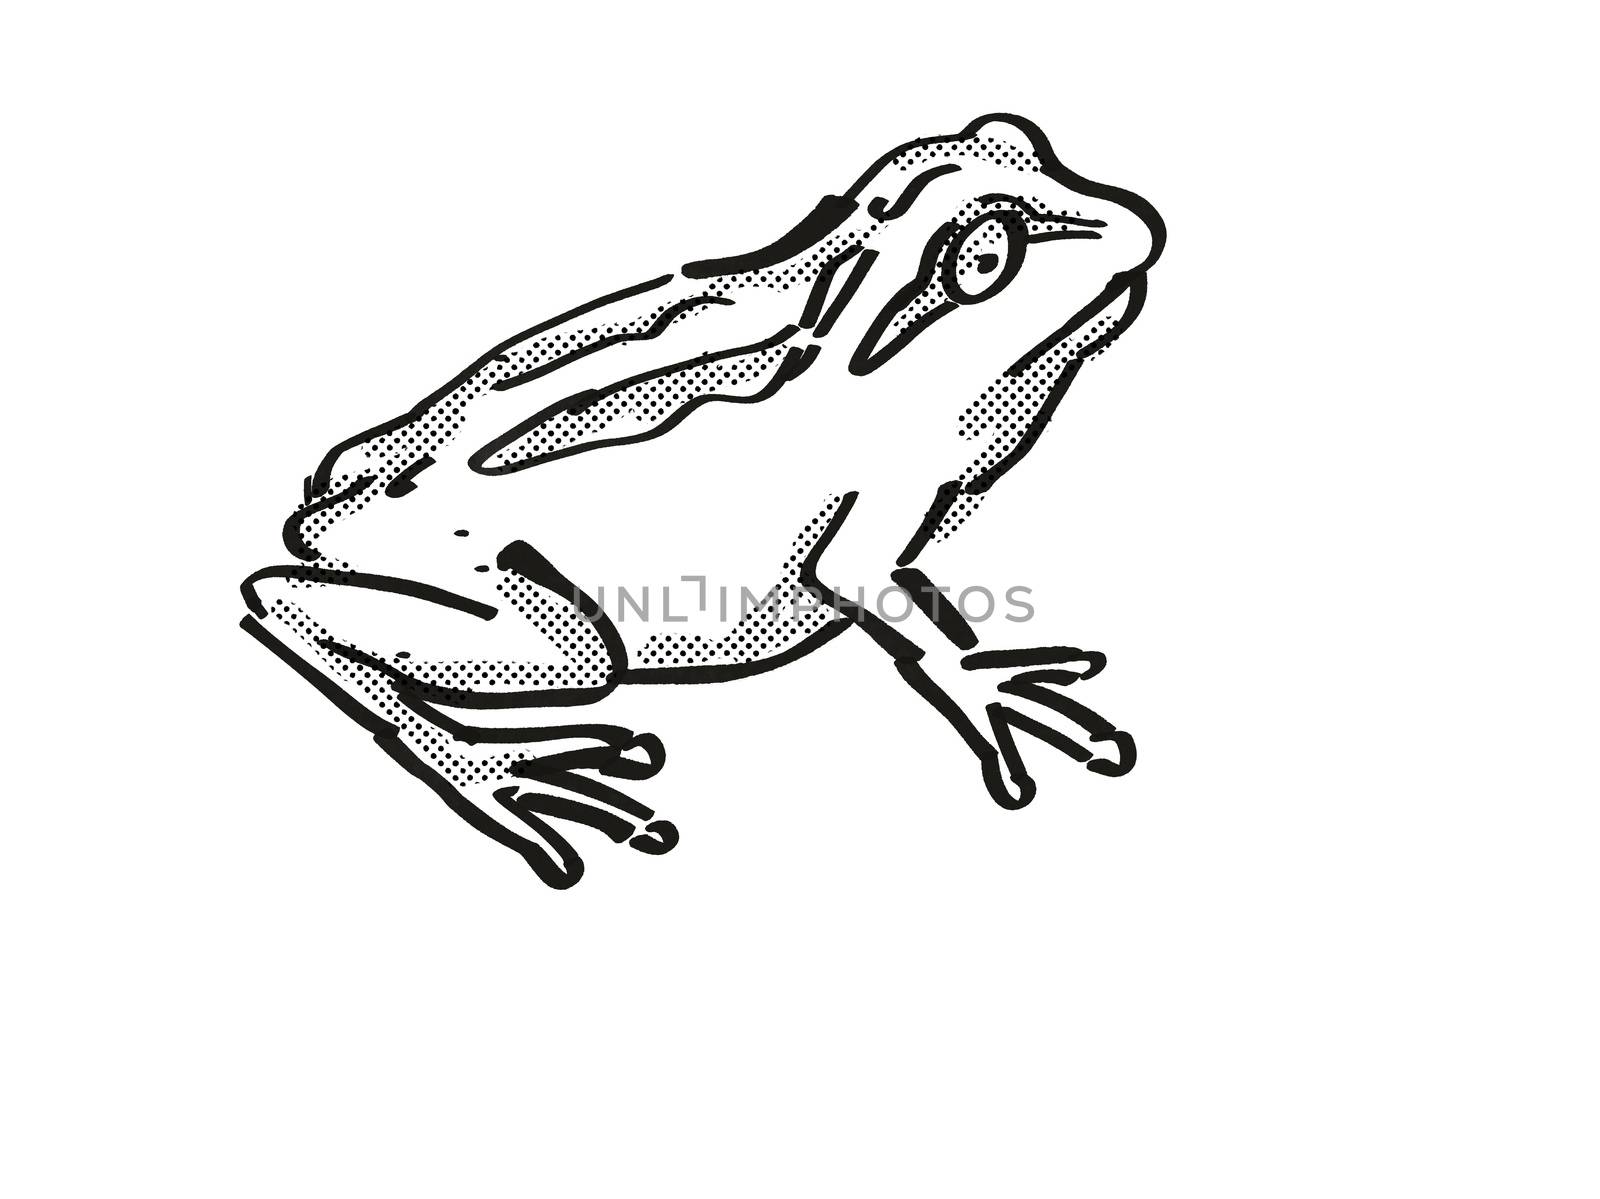 Whistling Tree Frog New Zealand Wildlife Cartoon Retro Drawing by patrimonio